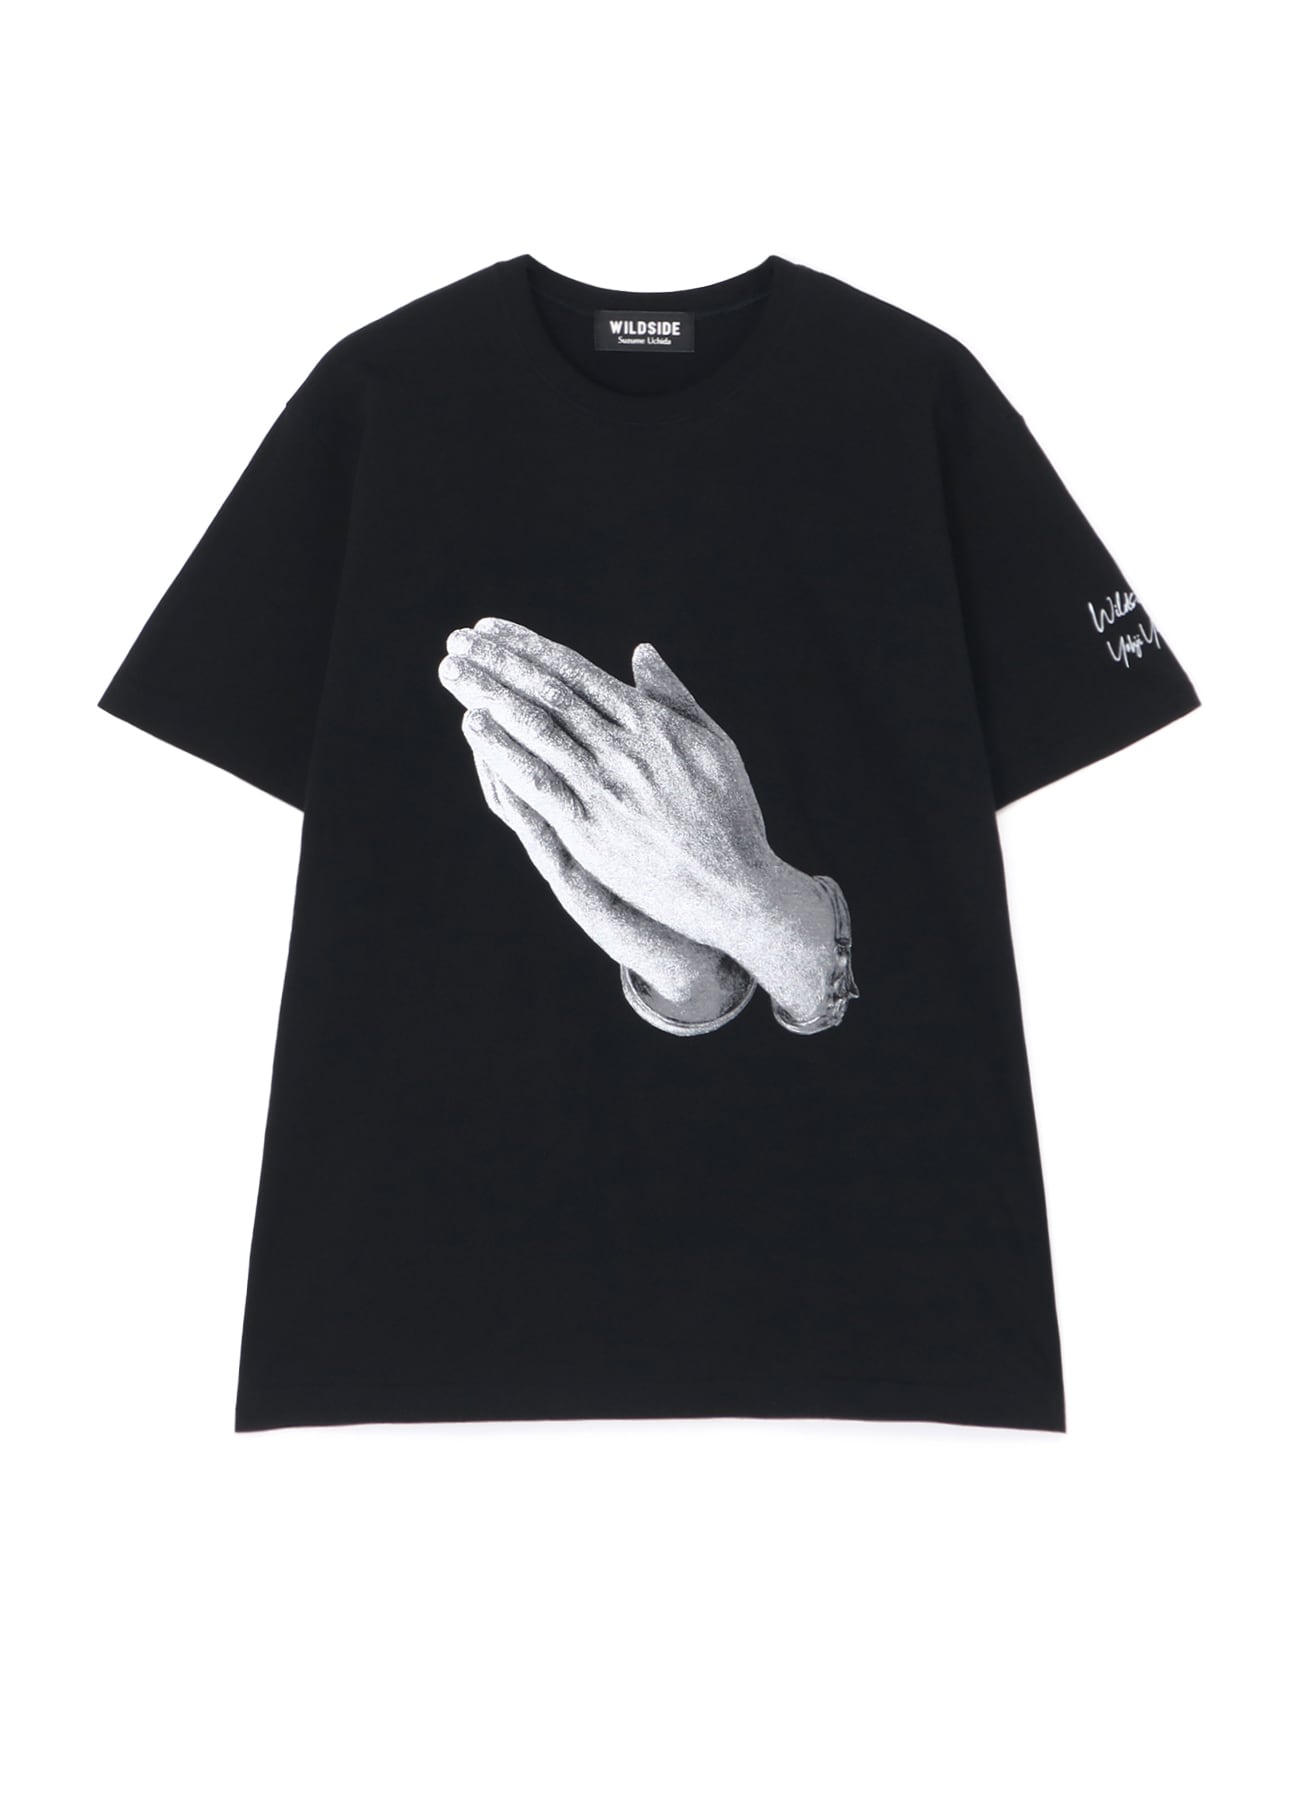 "Praying Hands" T-shirt